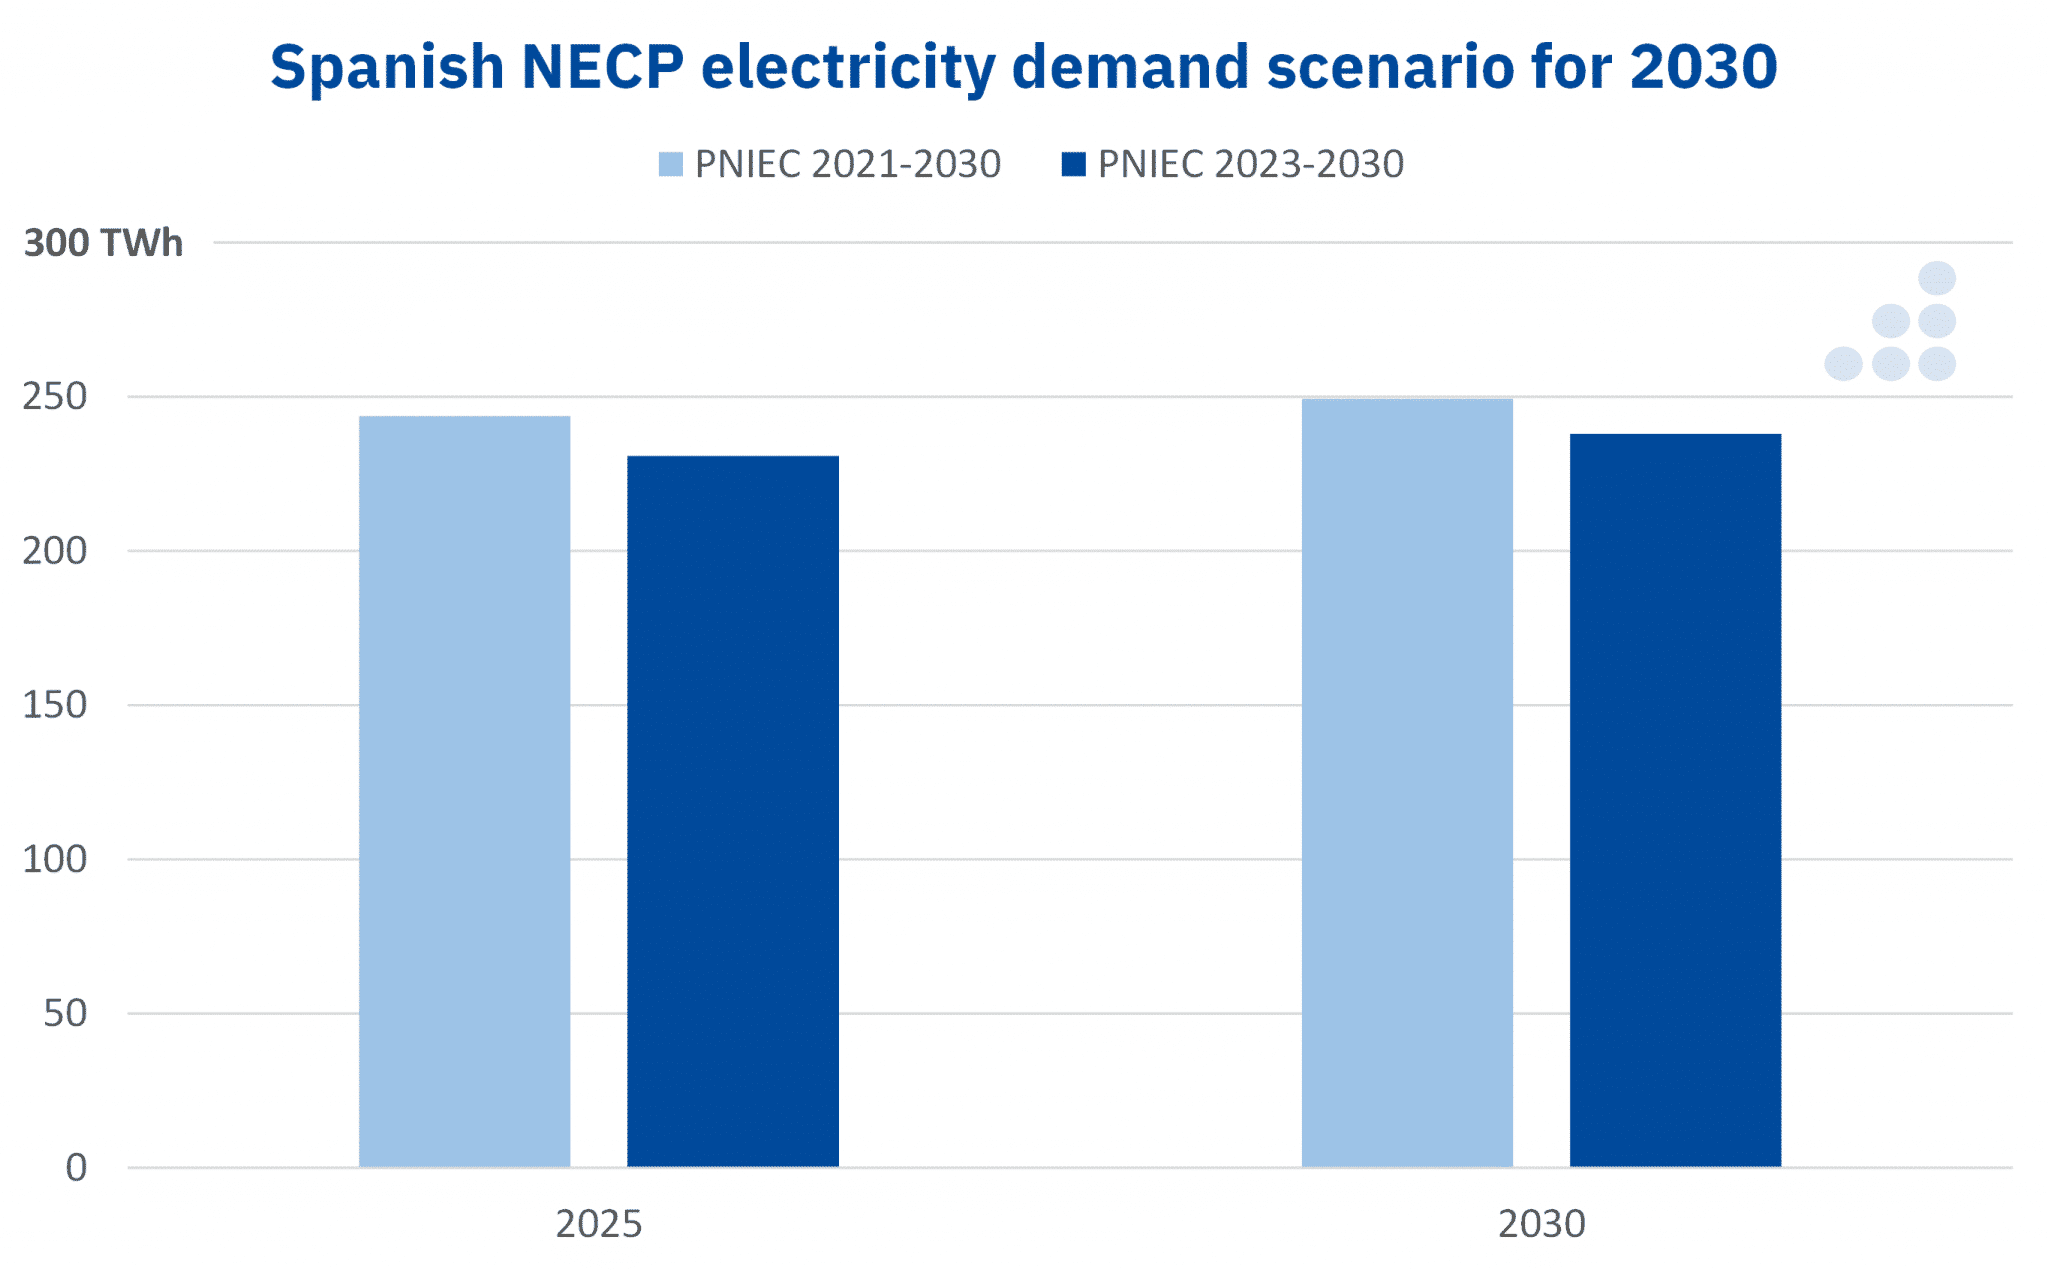 AleaSoft - Spanish NECP electricity demand scenario for 2030